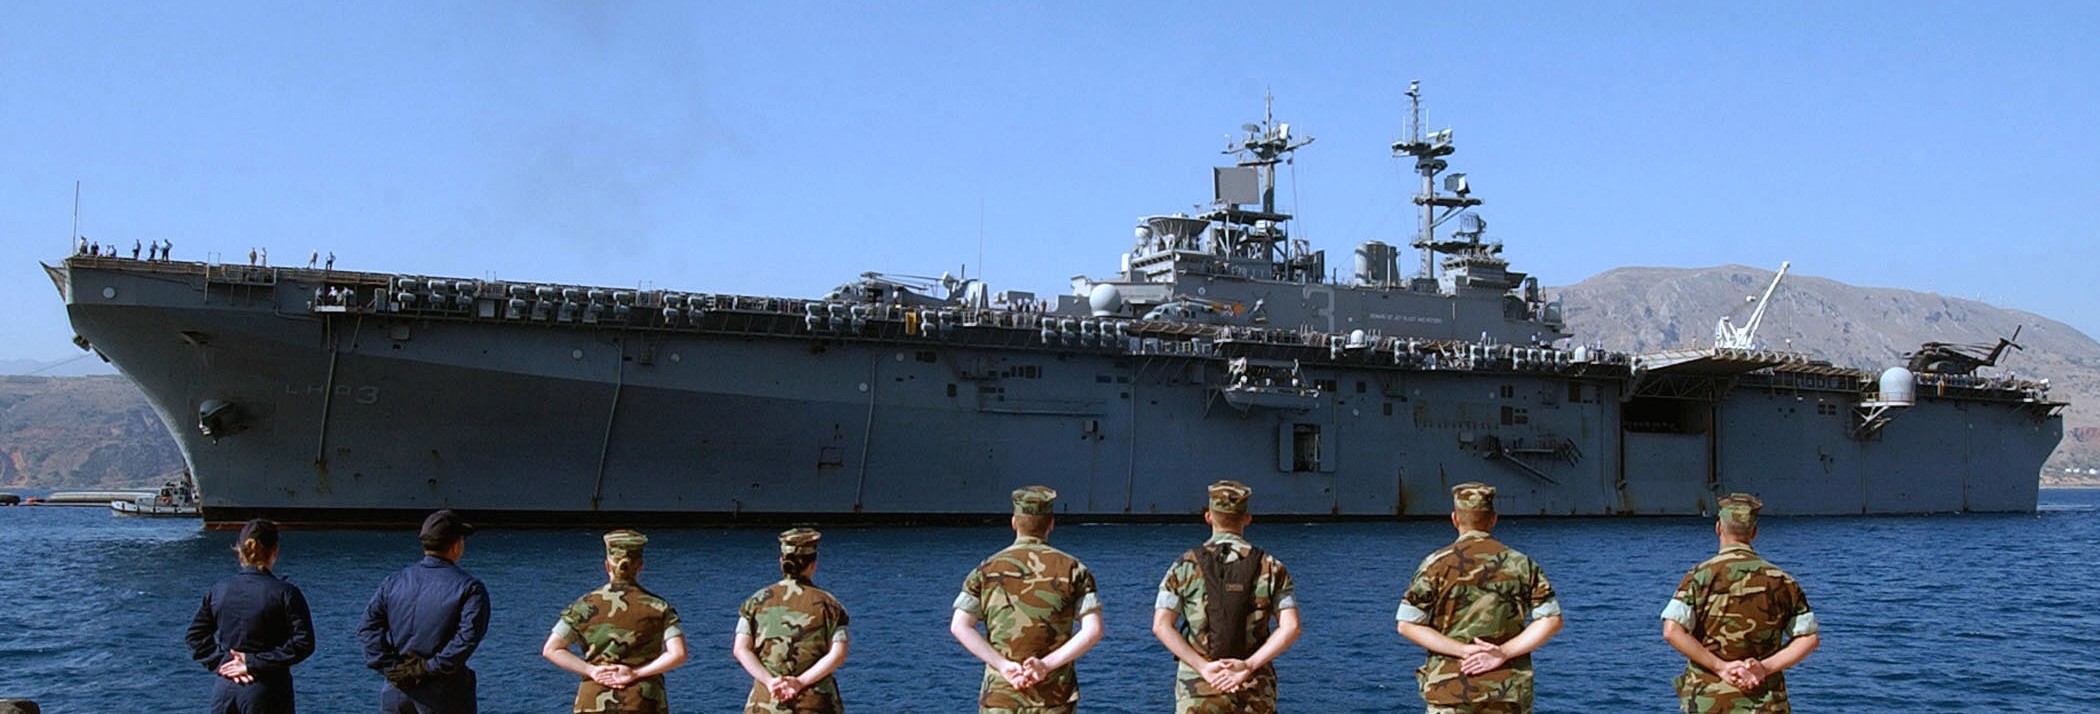 lhd-3 uss kearsarge wasp class amphibious assault ship us navy marines hmm-263 souda bay greece 38